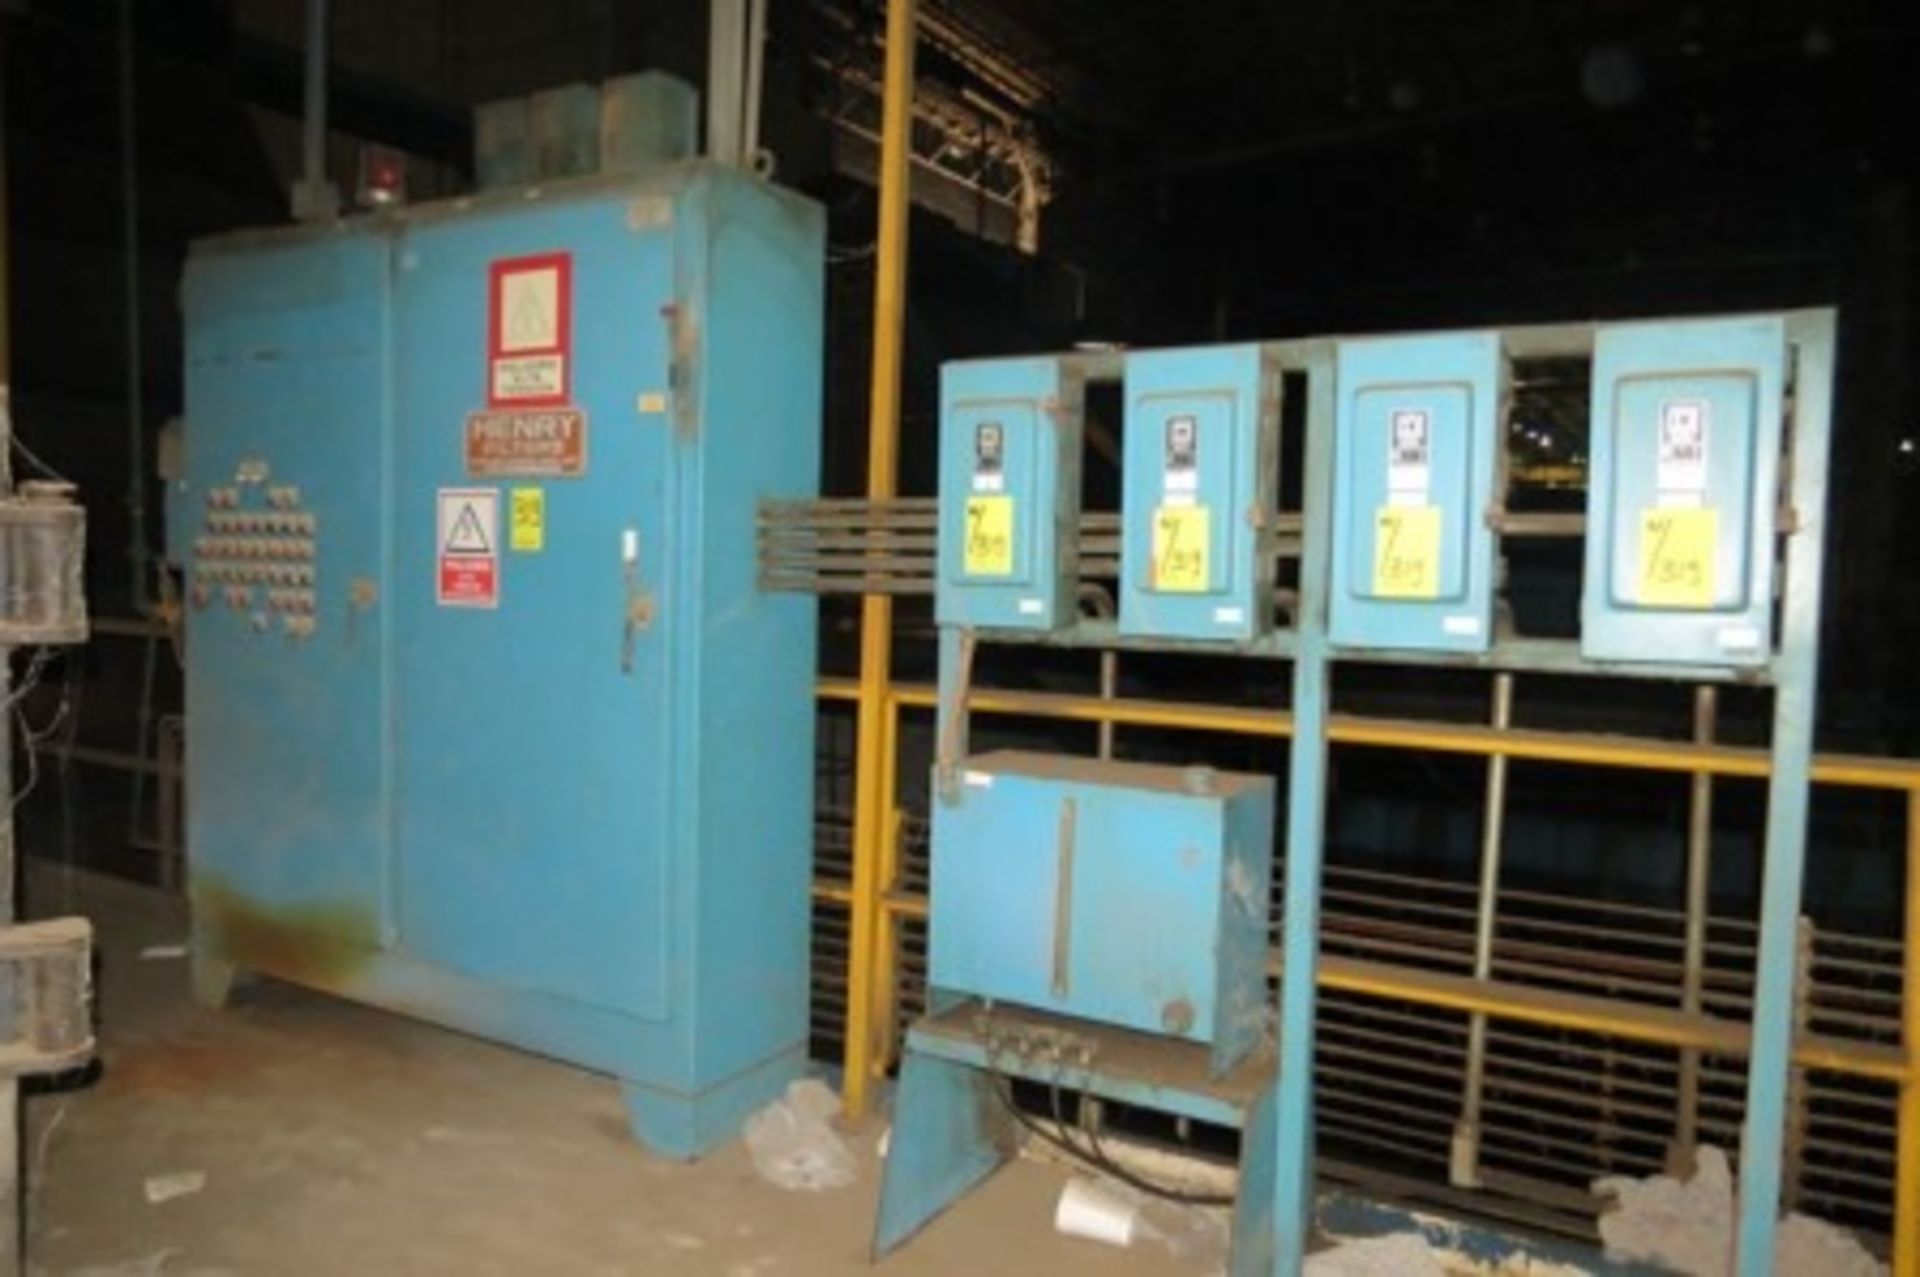 Pump control panel, four 100 A circuit breaker